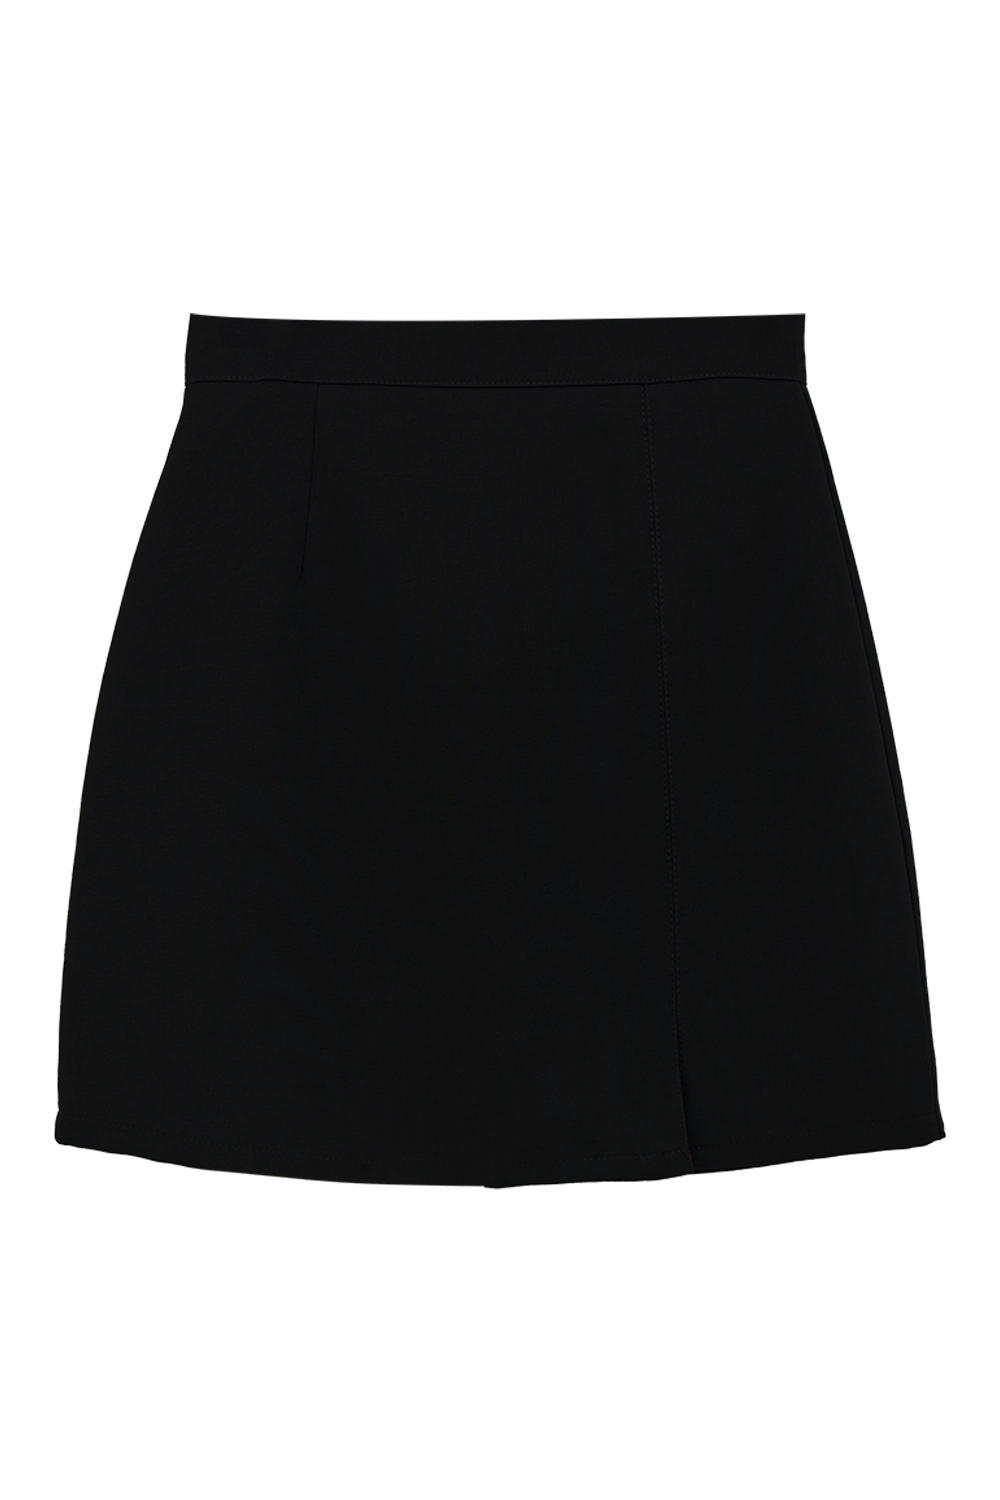 Sleek A-Line Mini Skirt with Side Slit